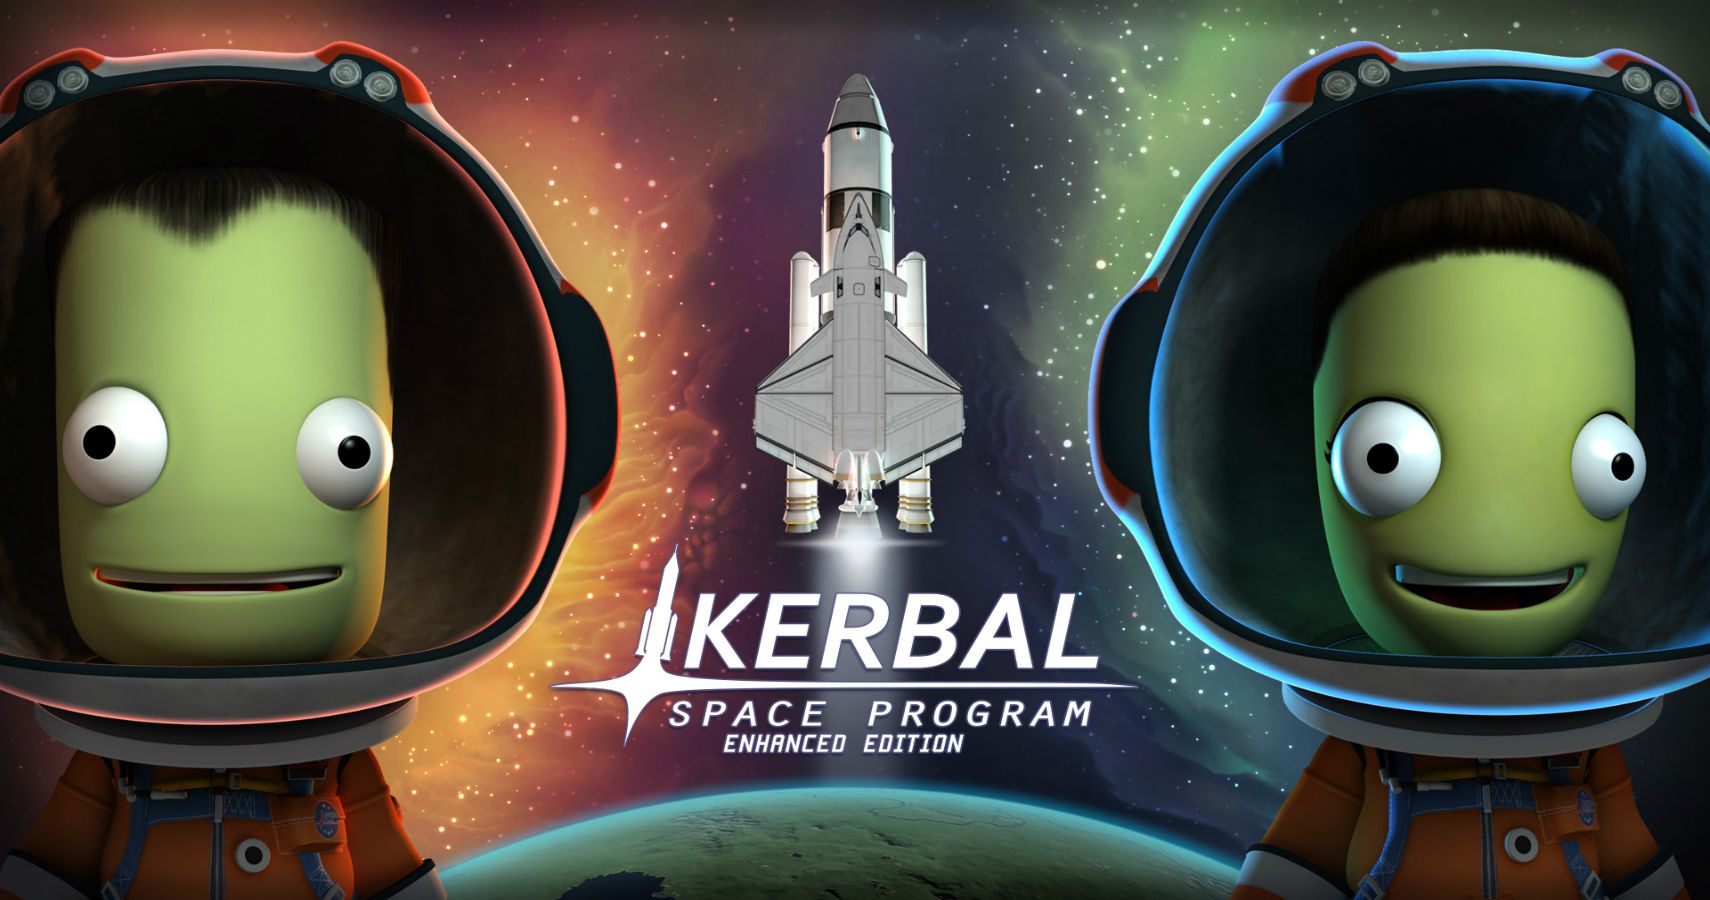 kerbal space program2 download free